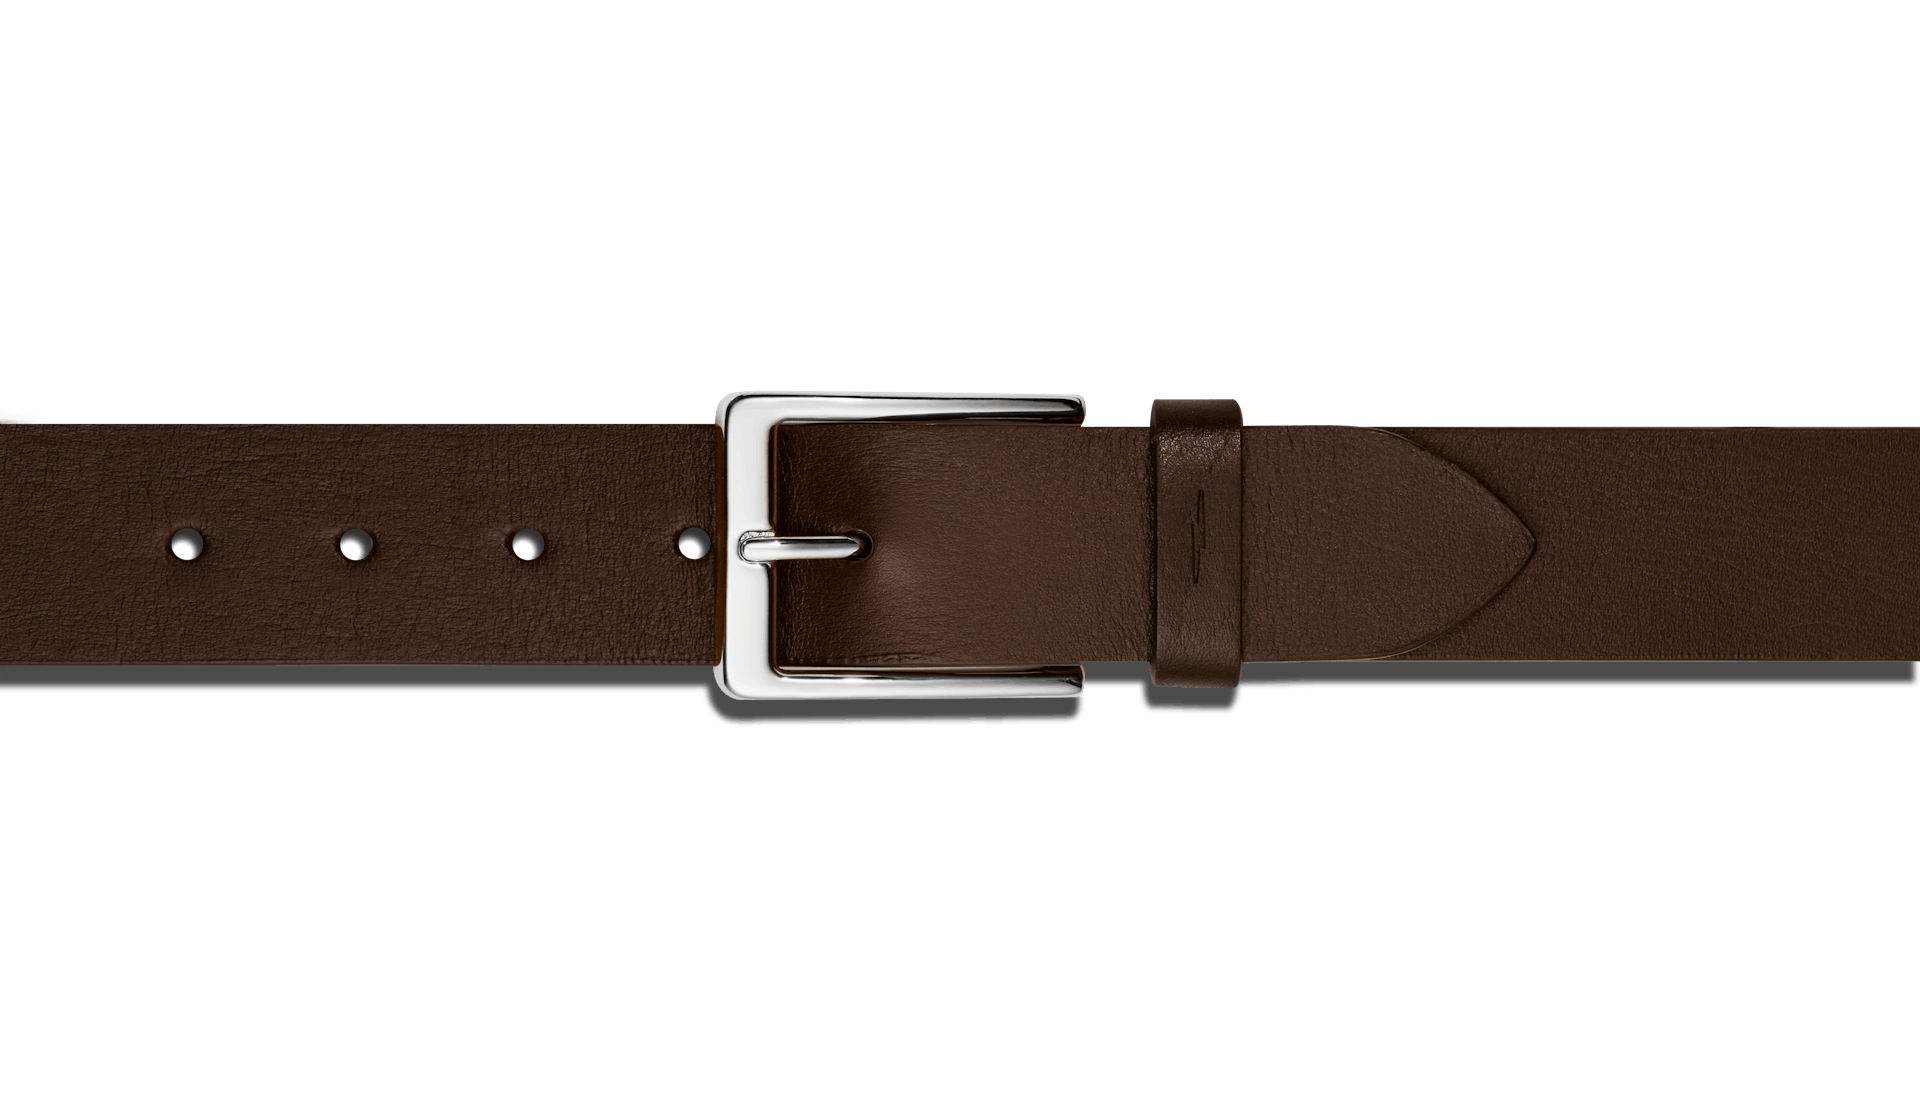 Camel Tan Leather $195 Shinola Medium Understated Journal Ipad Mini Cover 